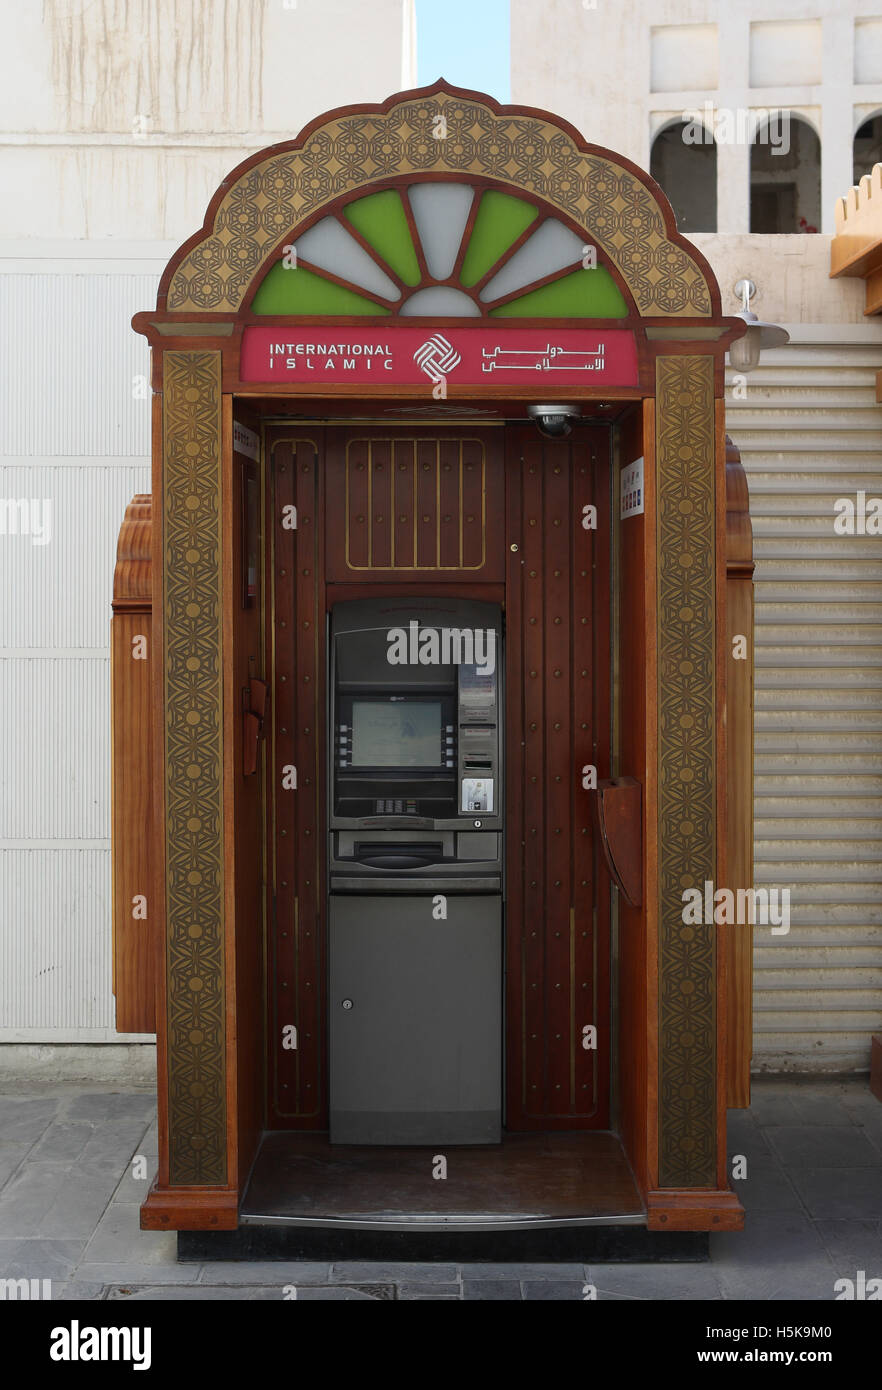 Cach machine, Doha, Qatar, Middle East Stock Photo